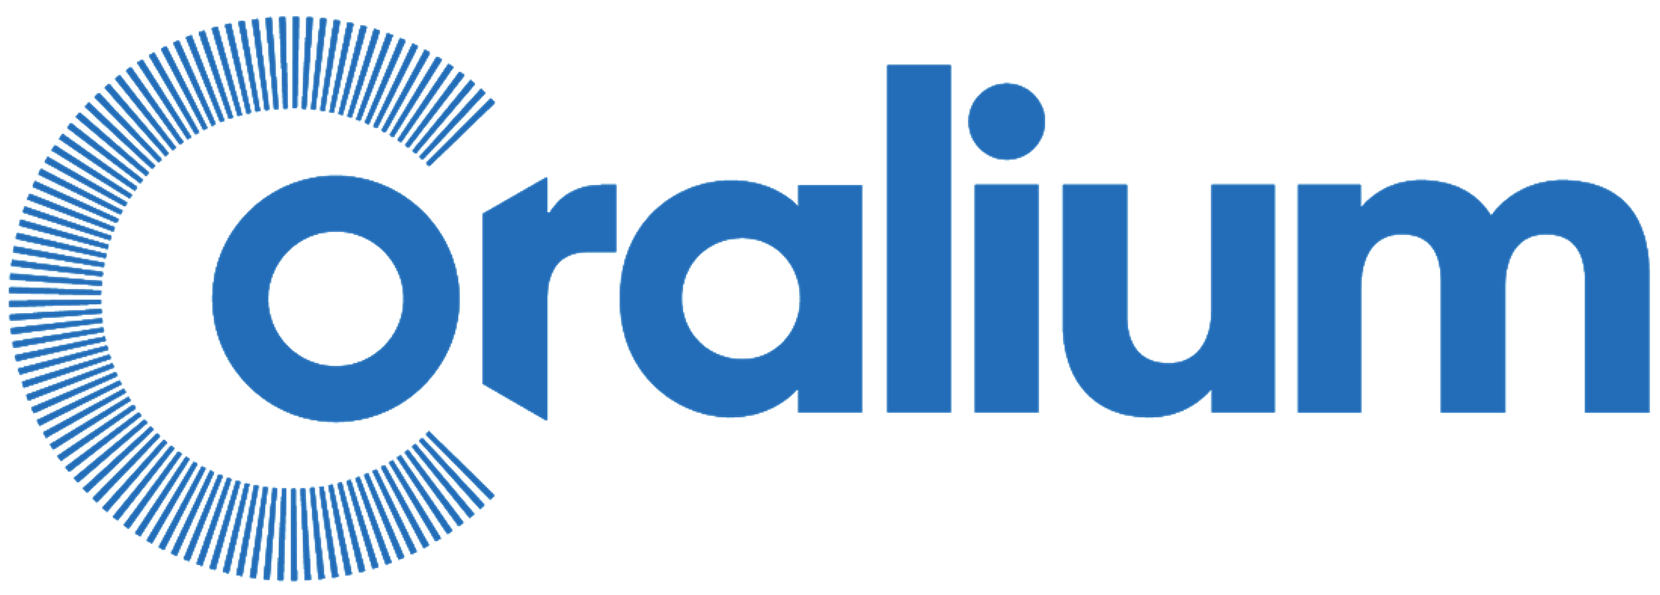 Coralium logo png